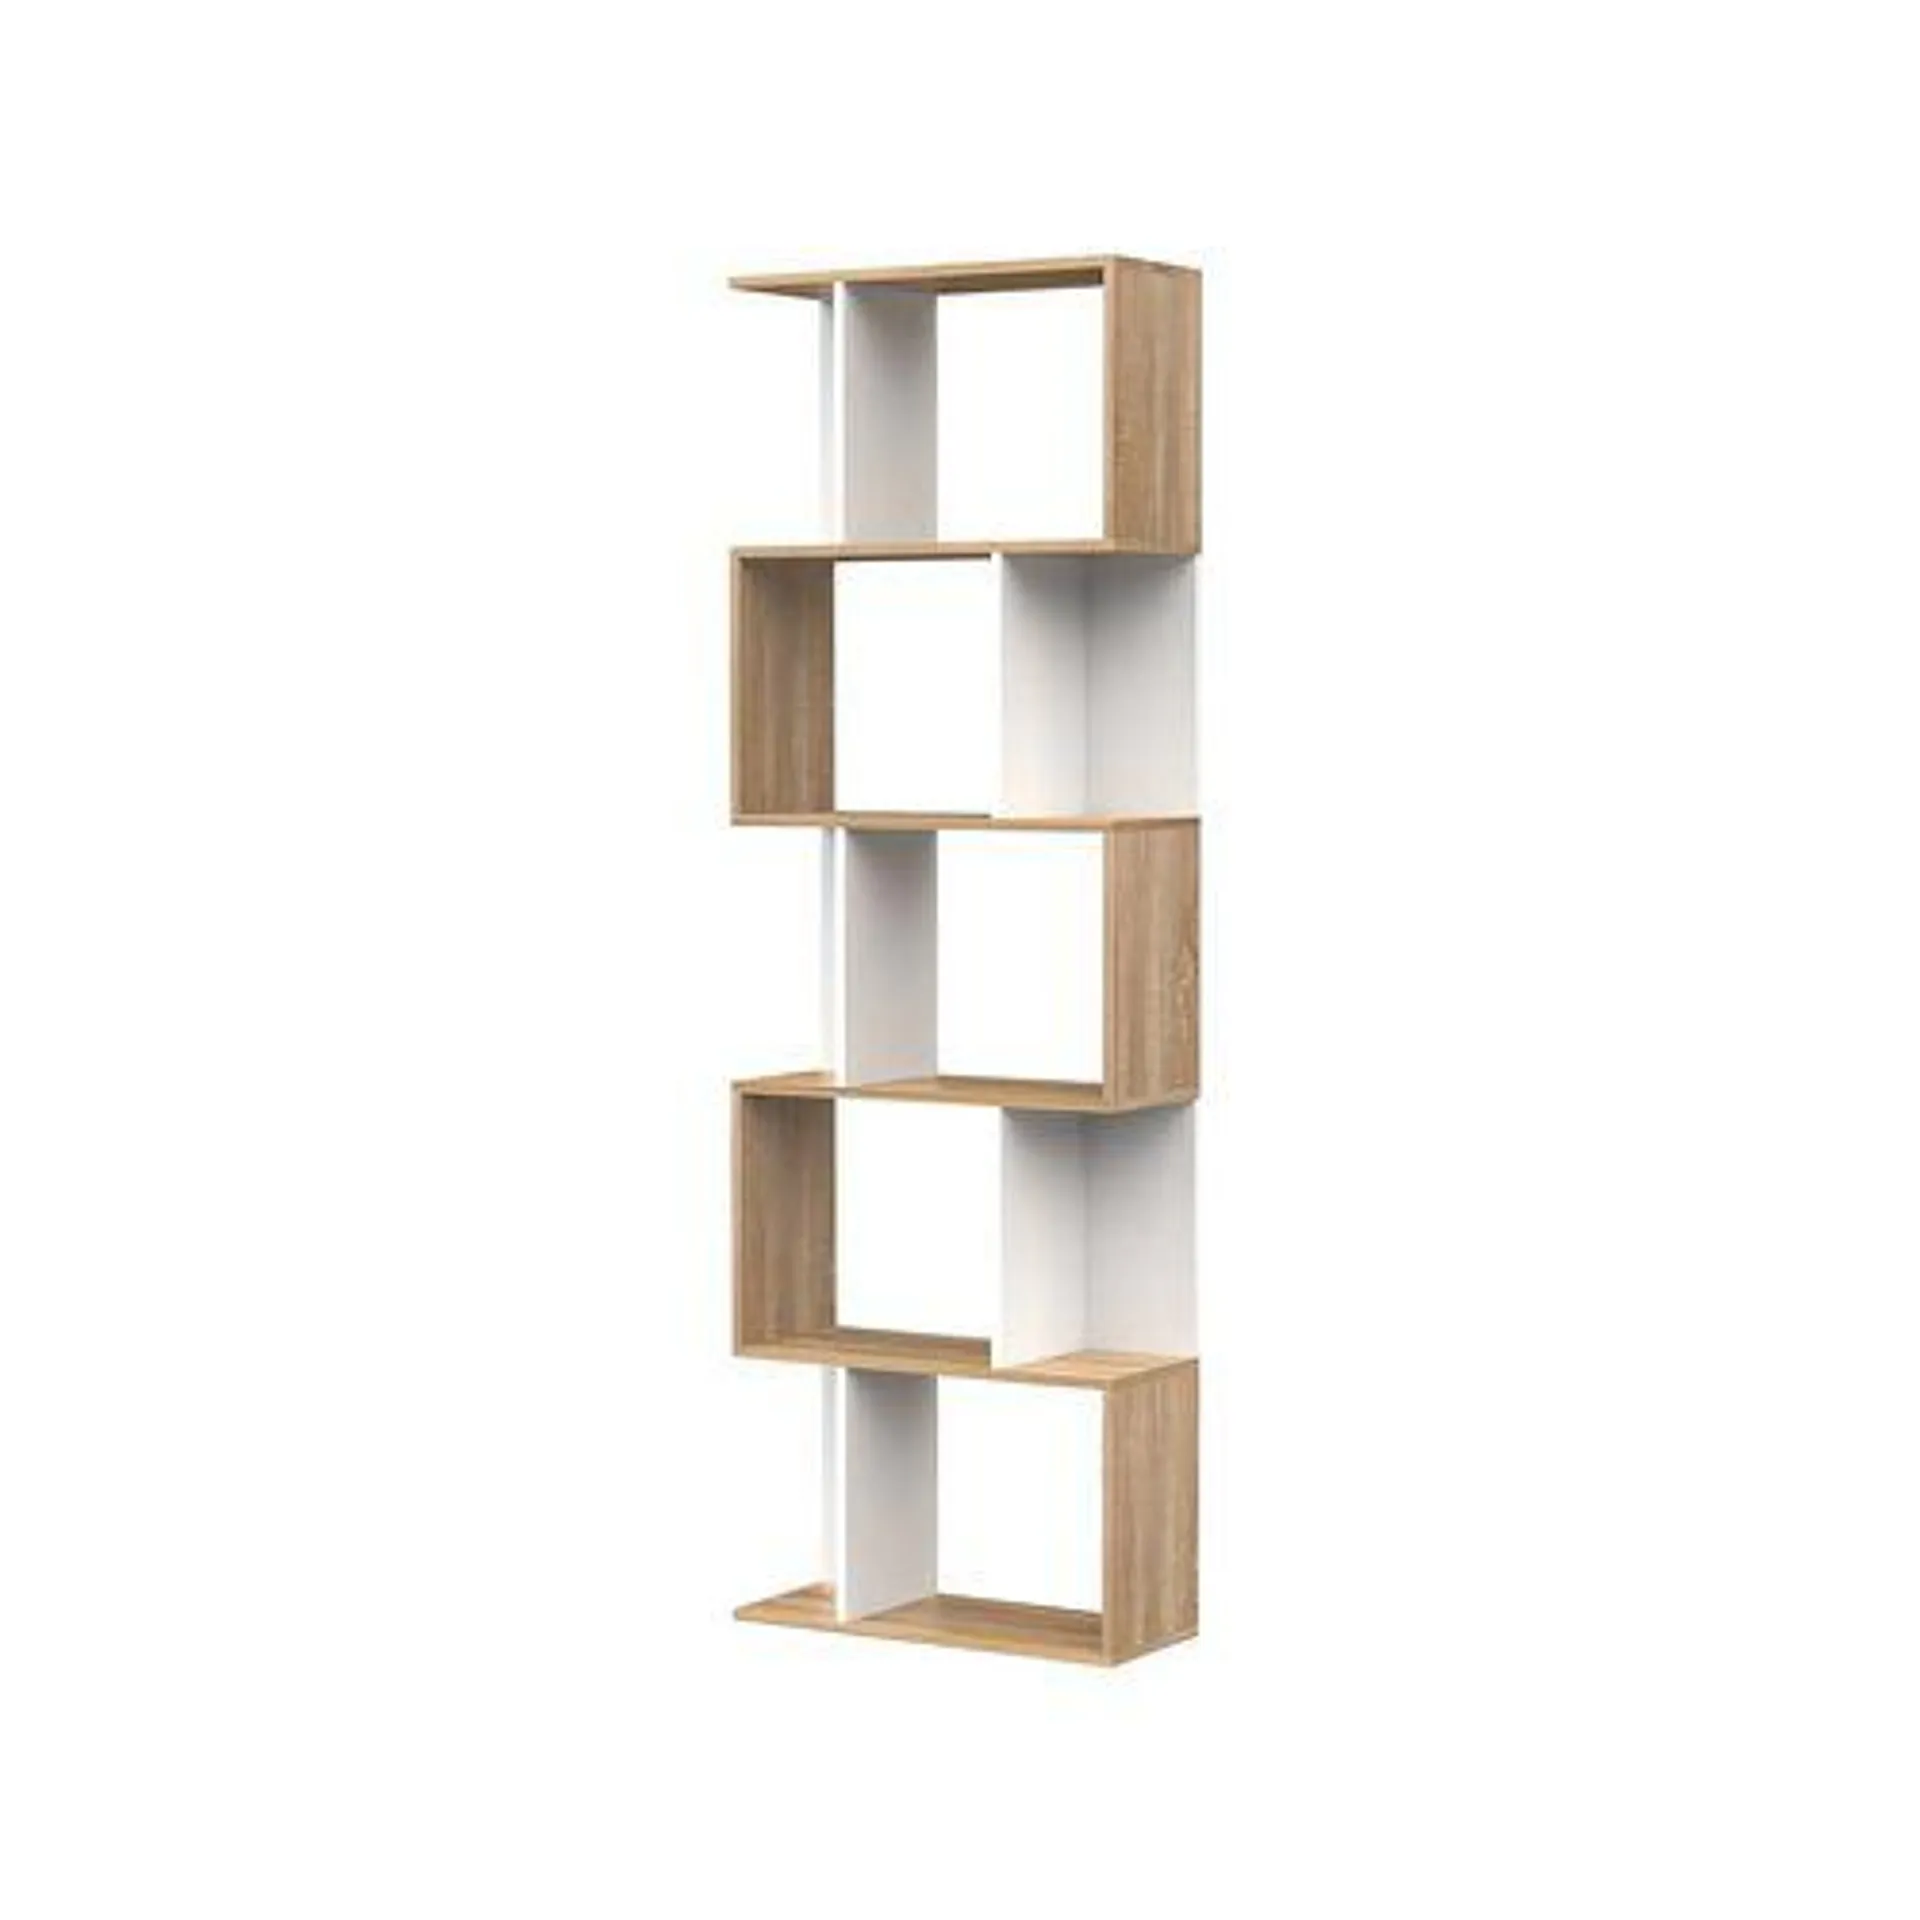 Advwin 5-tier Display Bookcase Shelves Storage Bookshelf Cabinet Shelf Wooden